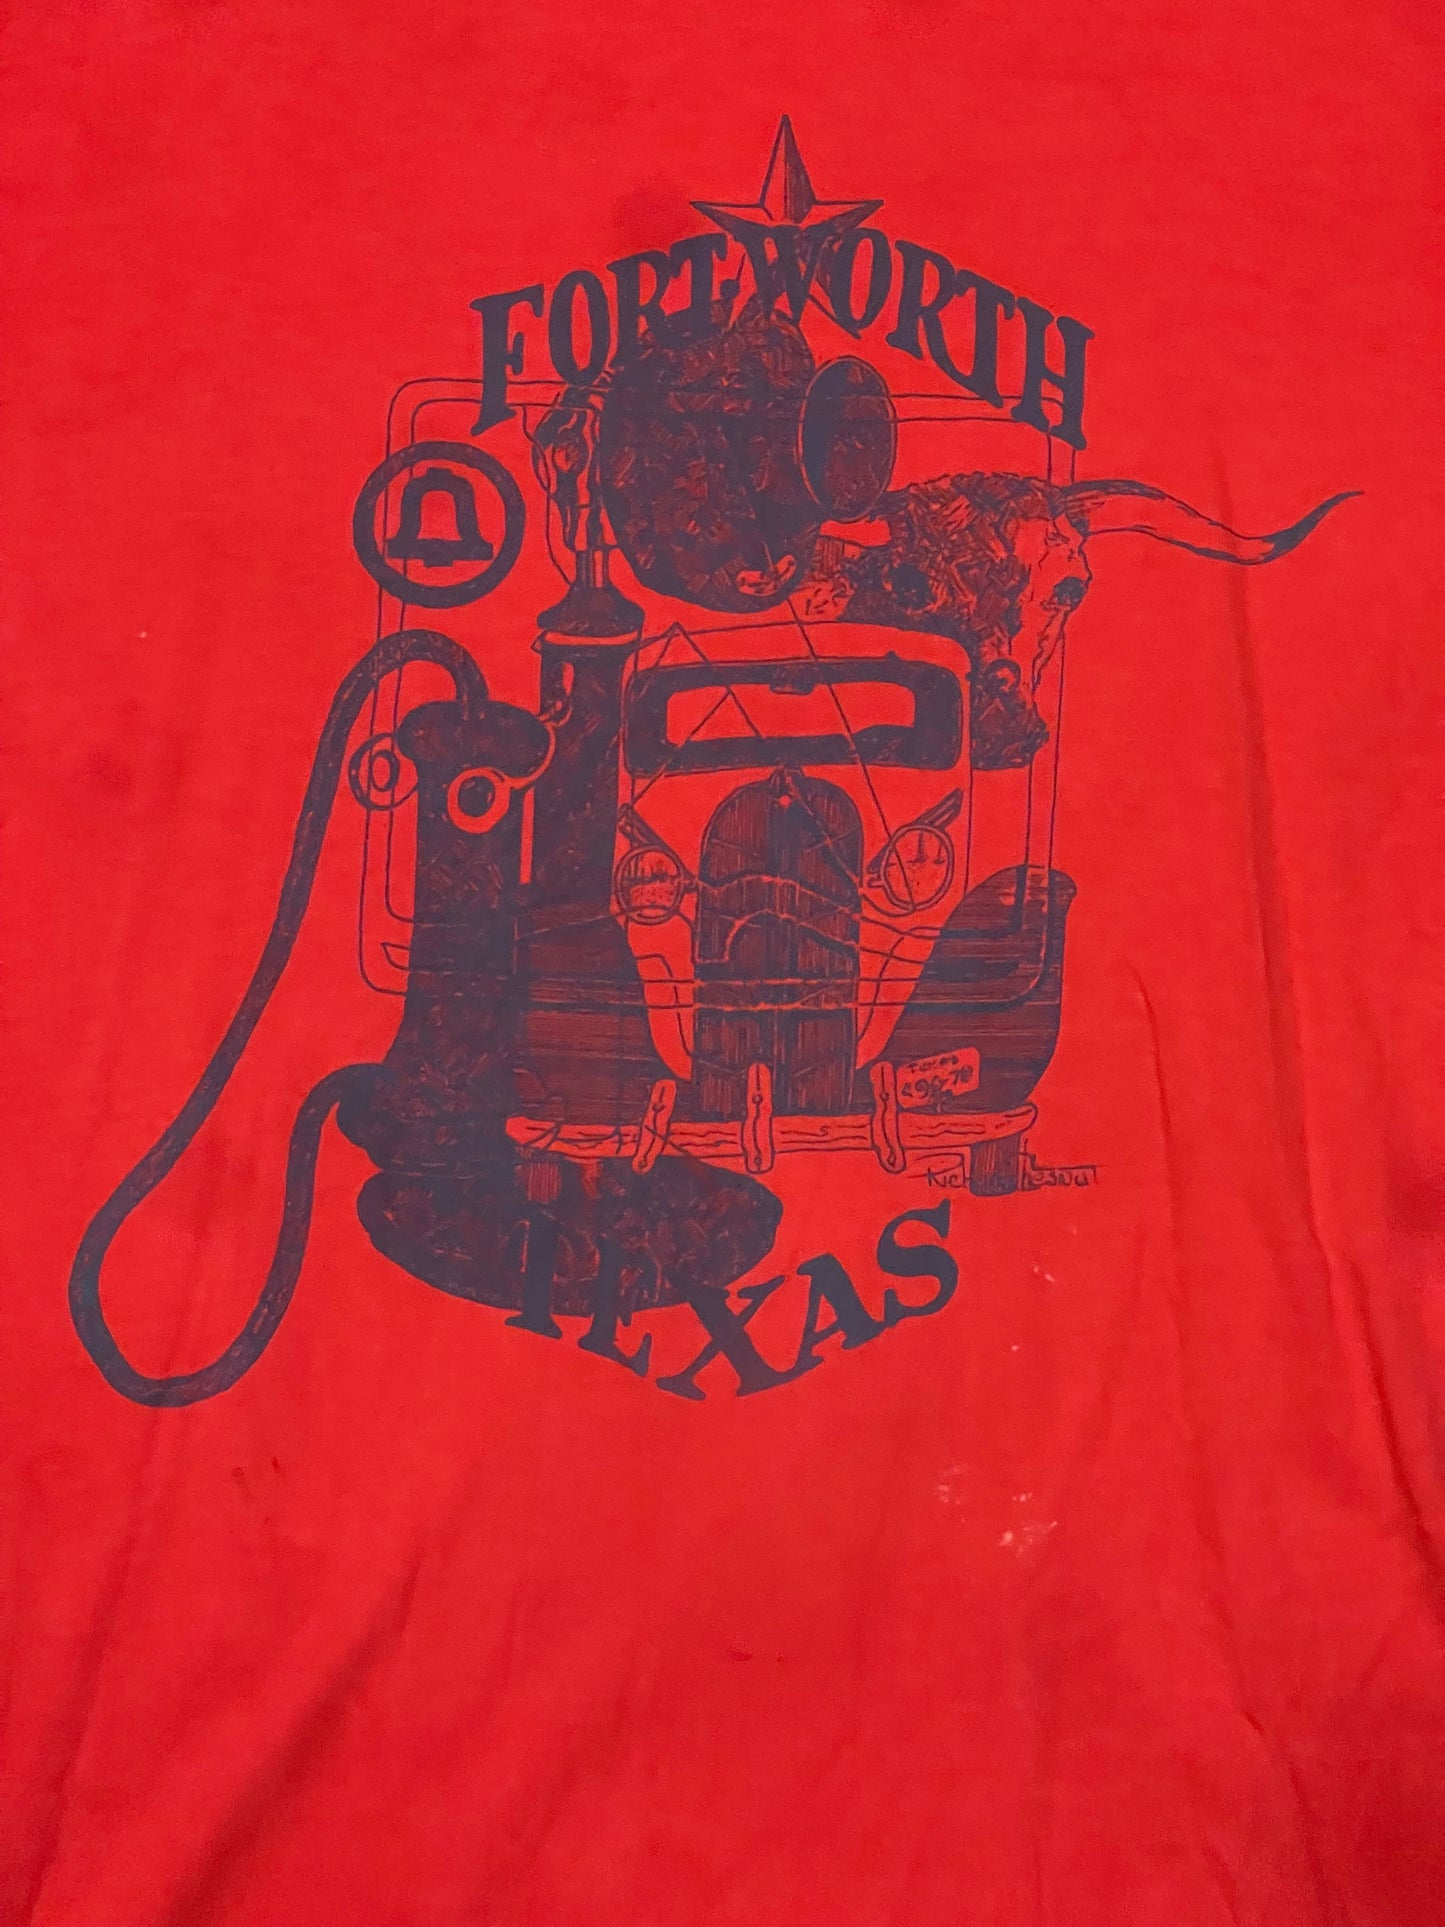 90’s Fort Worth, Texas Tee